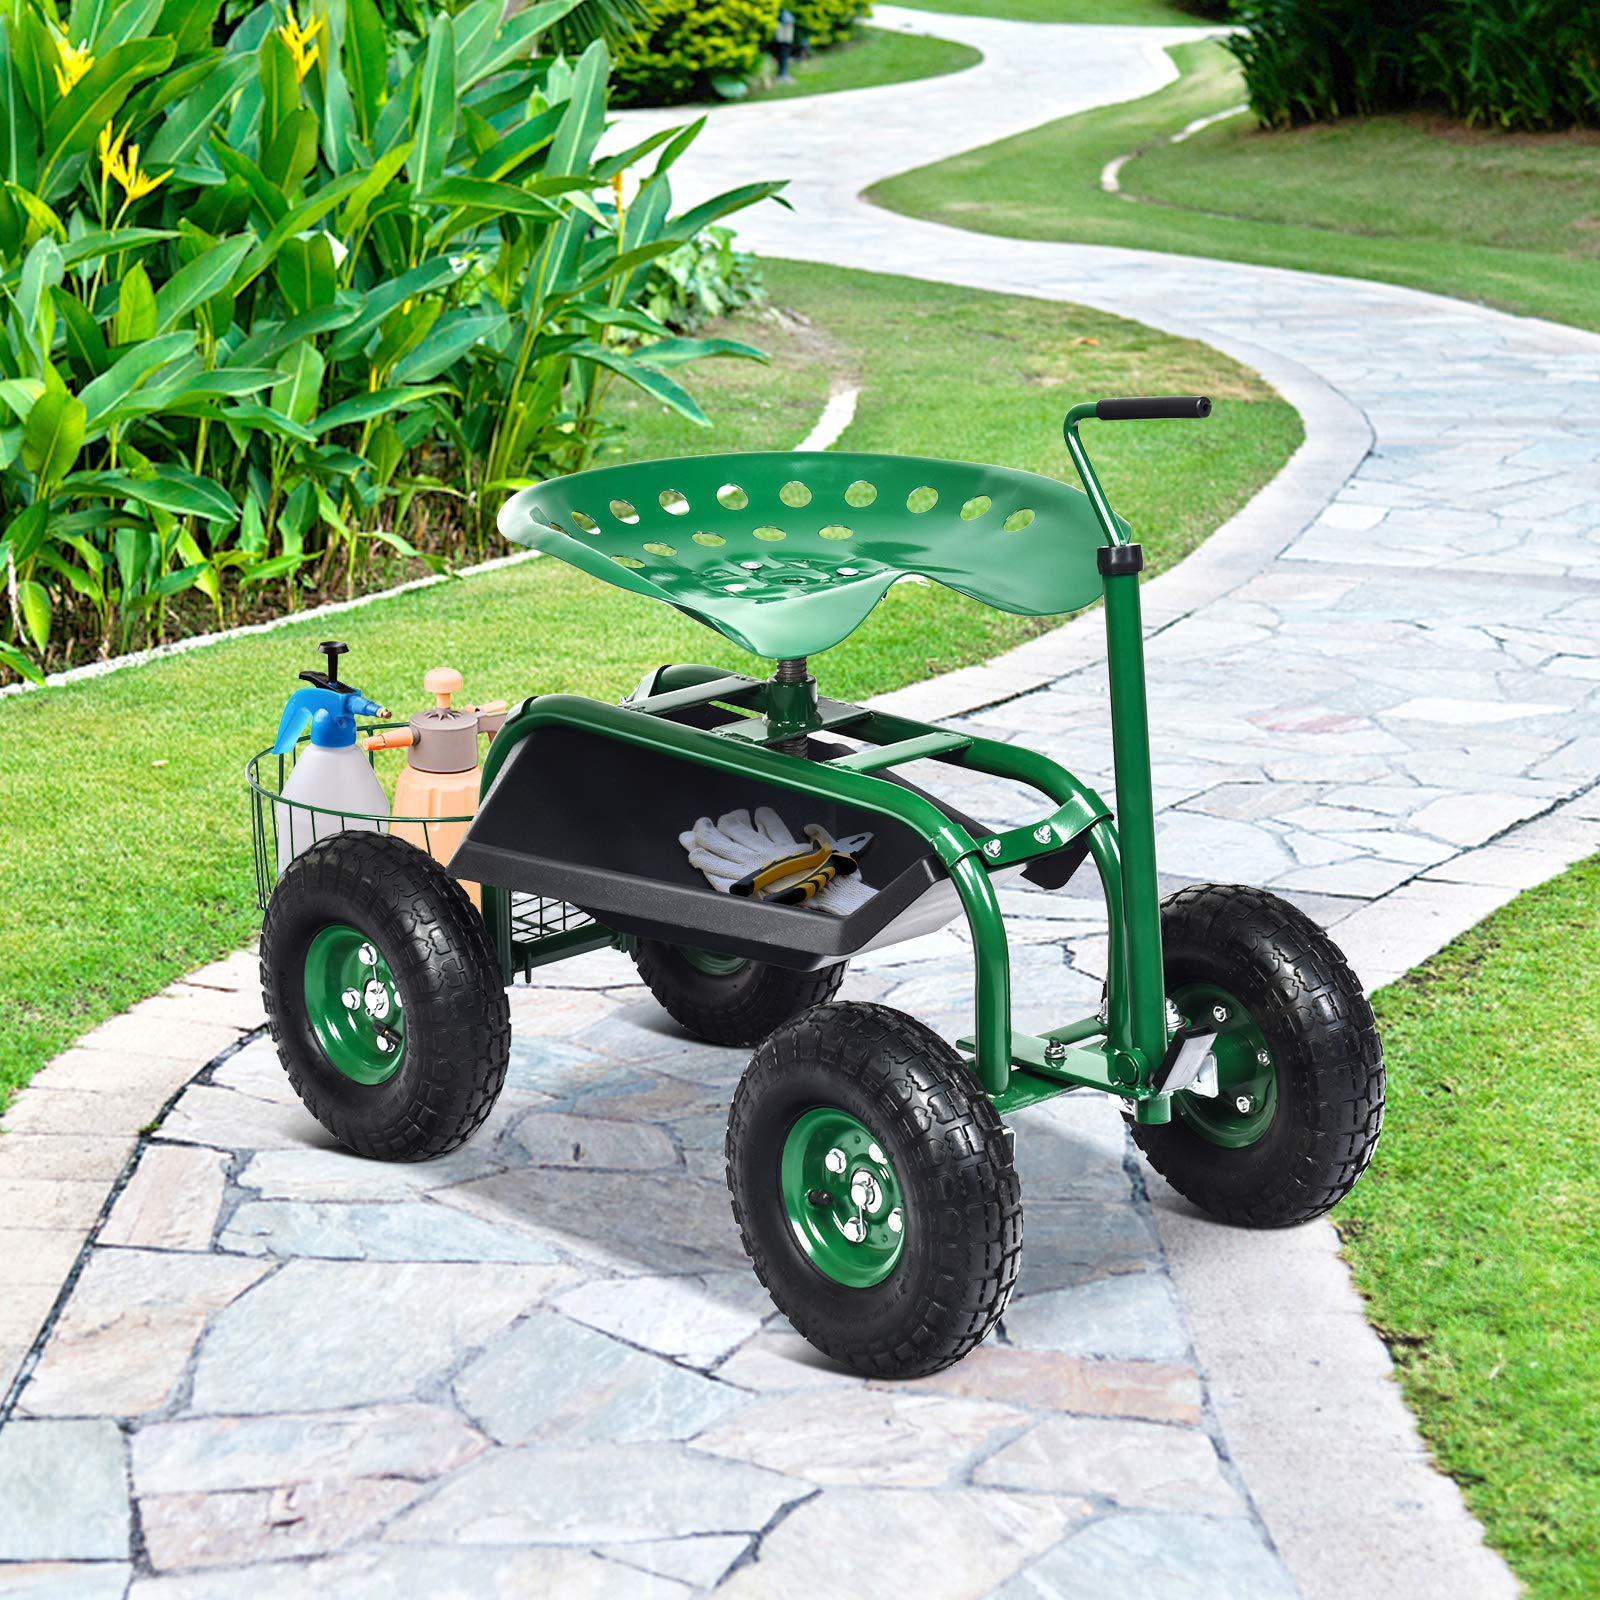 Giantex Garden Cart, 4-Wheel Gardening Workseat with Storage Basket (Green)